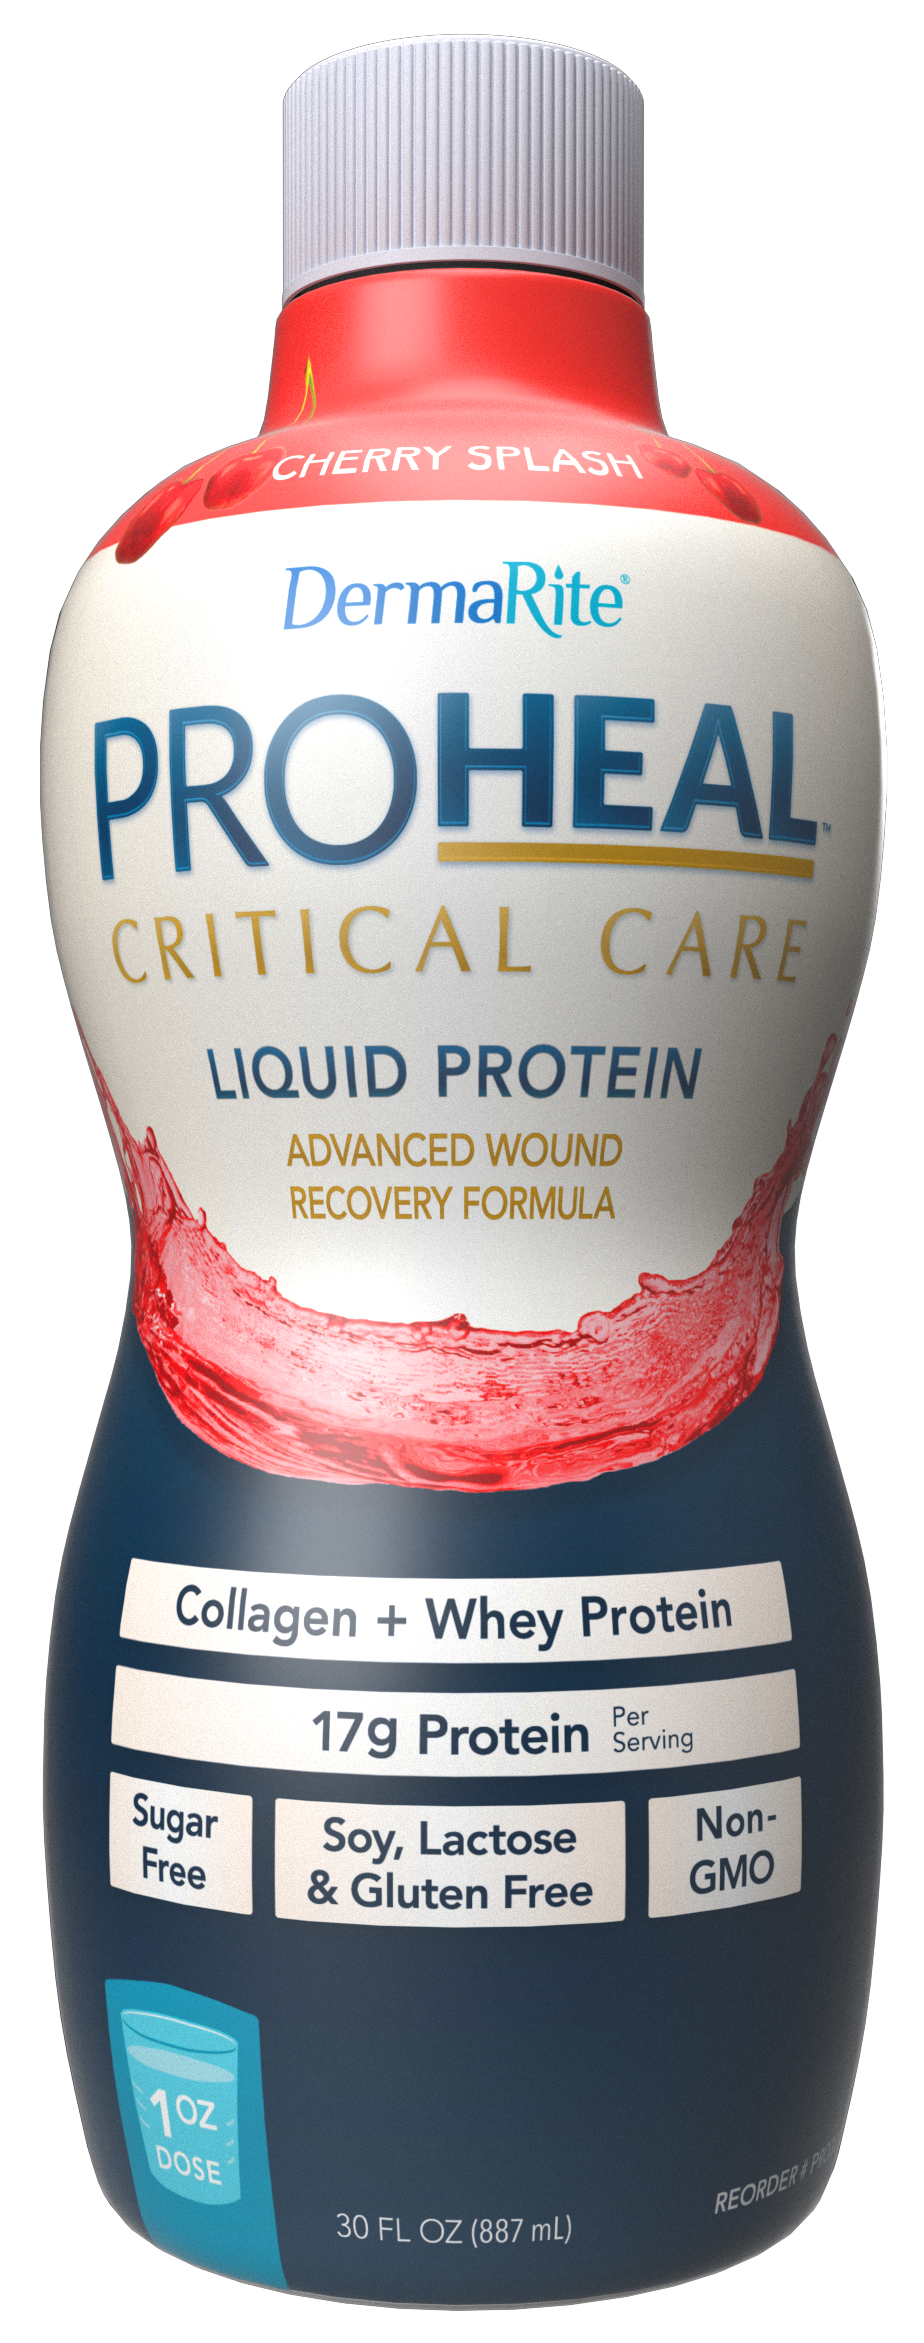 DermaRite ProHeal Critical Care Liquid Protein Wound Recovery Formula, Cherry Splash, 30 oz.